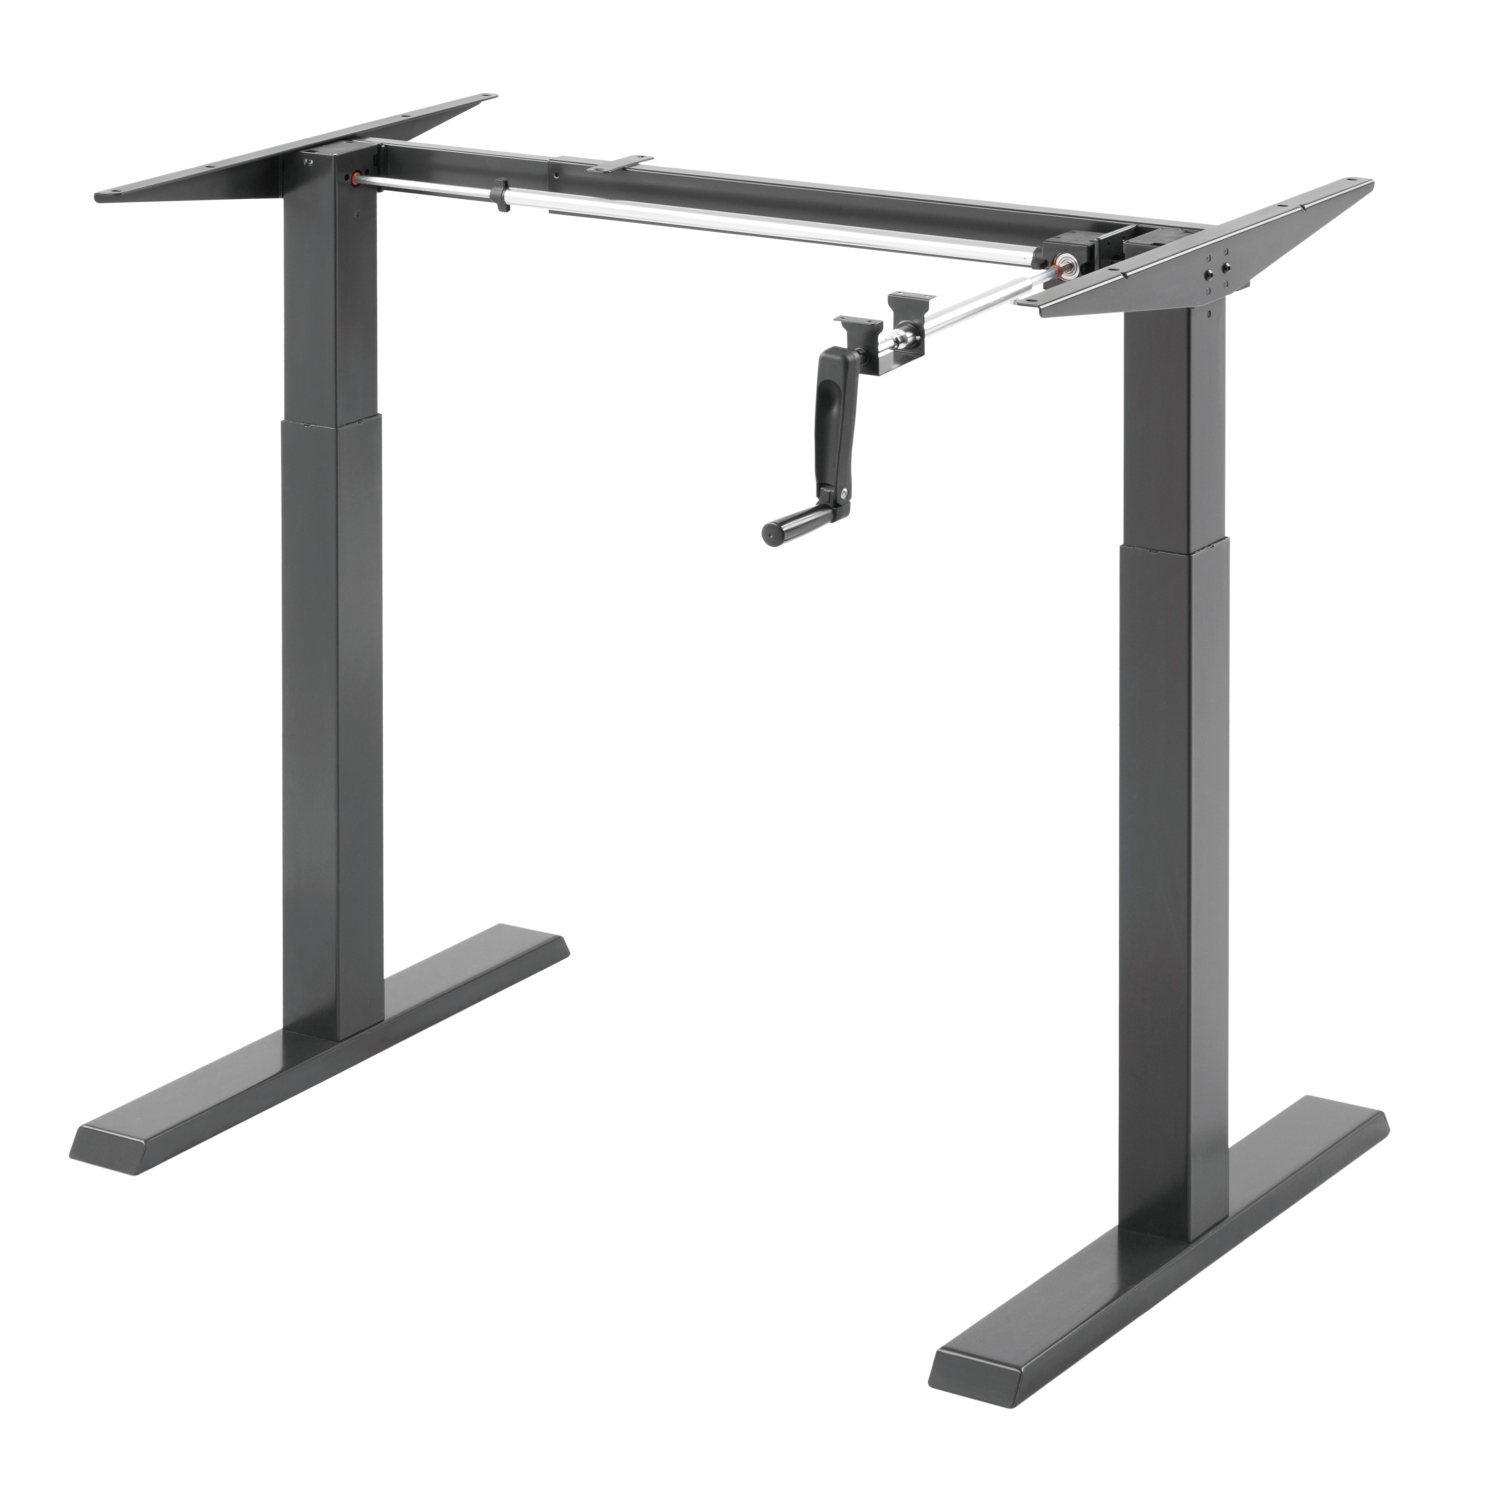 Uplite Manuel Stand Up Desk Frame with Hand Crank System for 34 to 71 inch Table Tops Ergonomic Height Adjustable Standing Desk Base 2 leg Workstation (Frame Only)